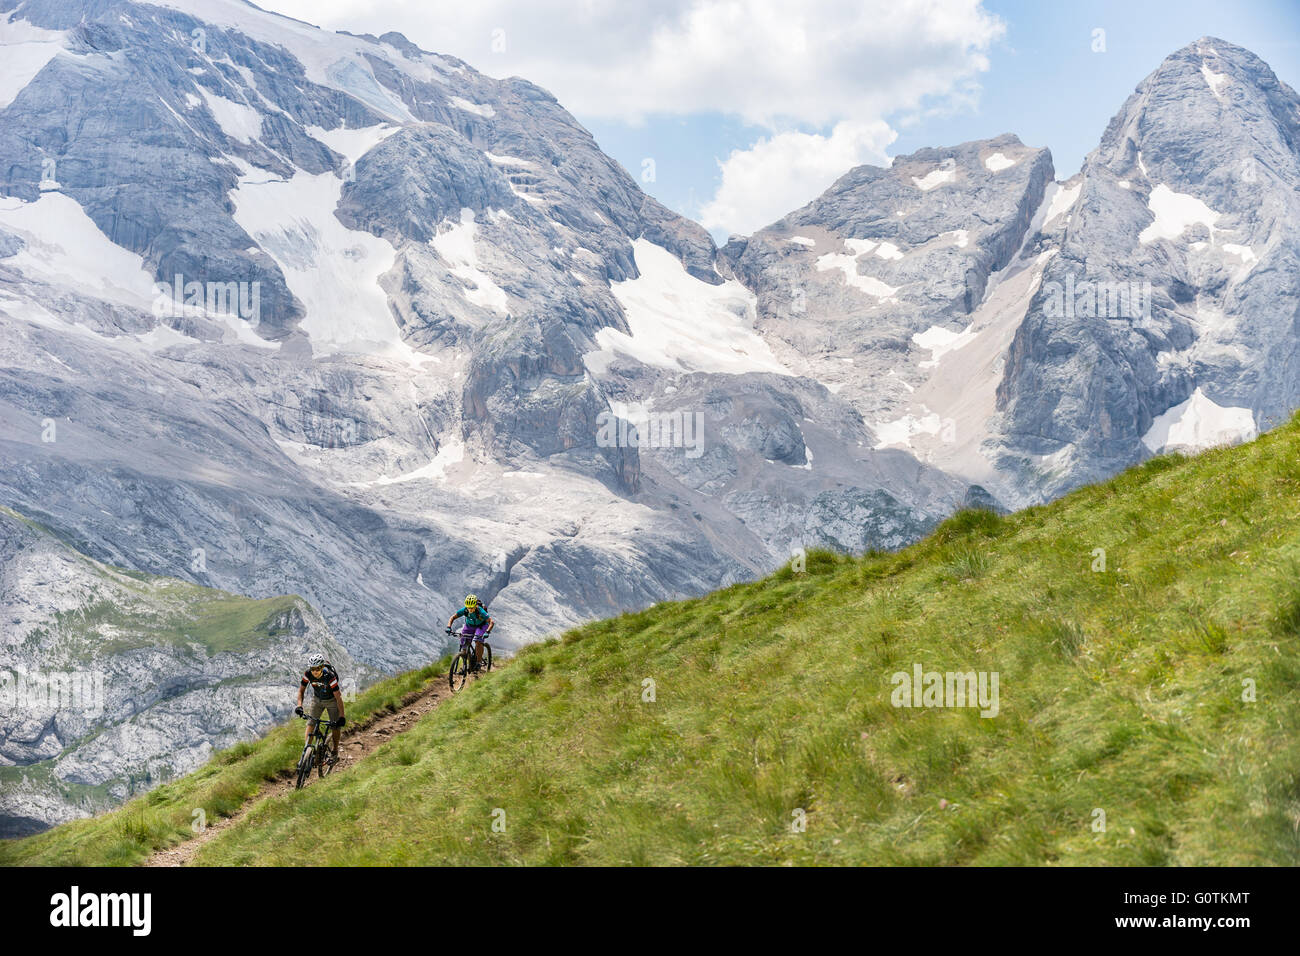 Man and woman riding mountain bikes along trail, Dolomites, Italy Stock Photo